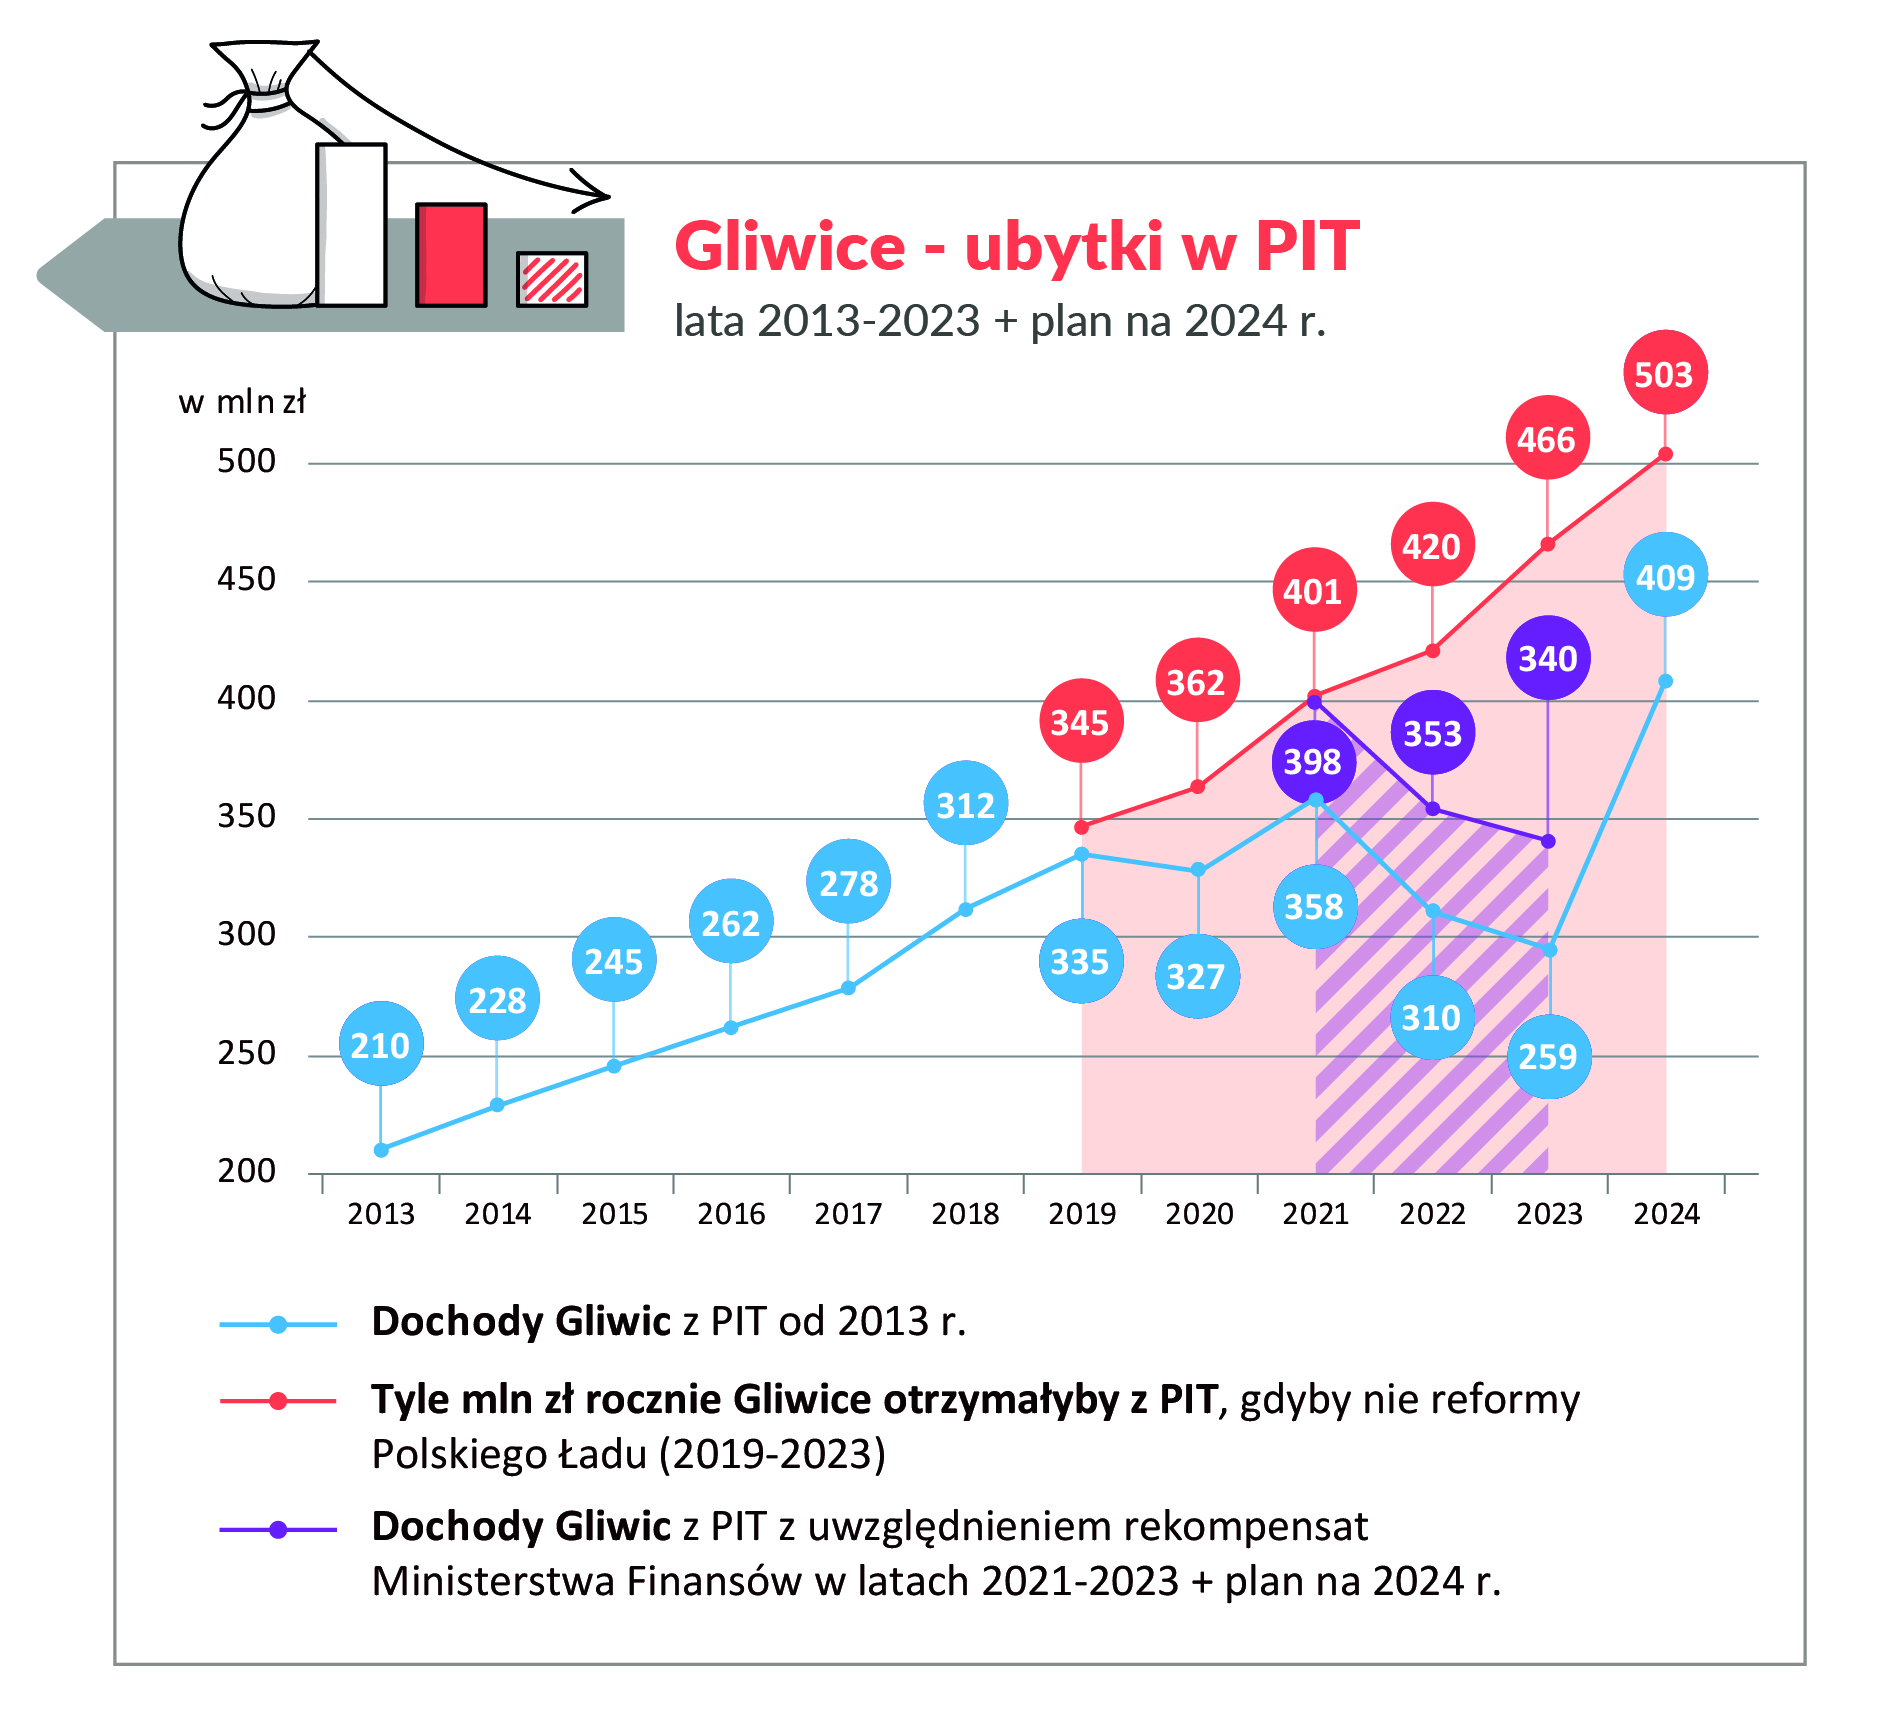 Gliwice – ubytki w PIT, lata 2013-2023 + plan na 2024 r.